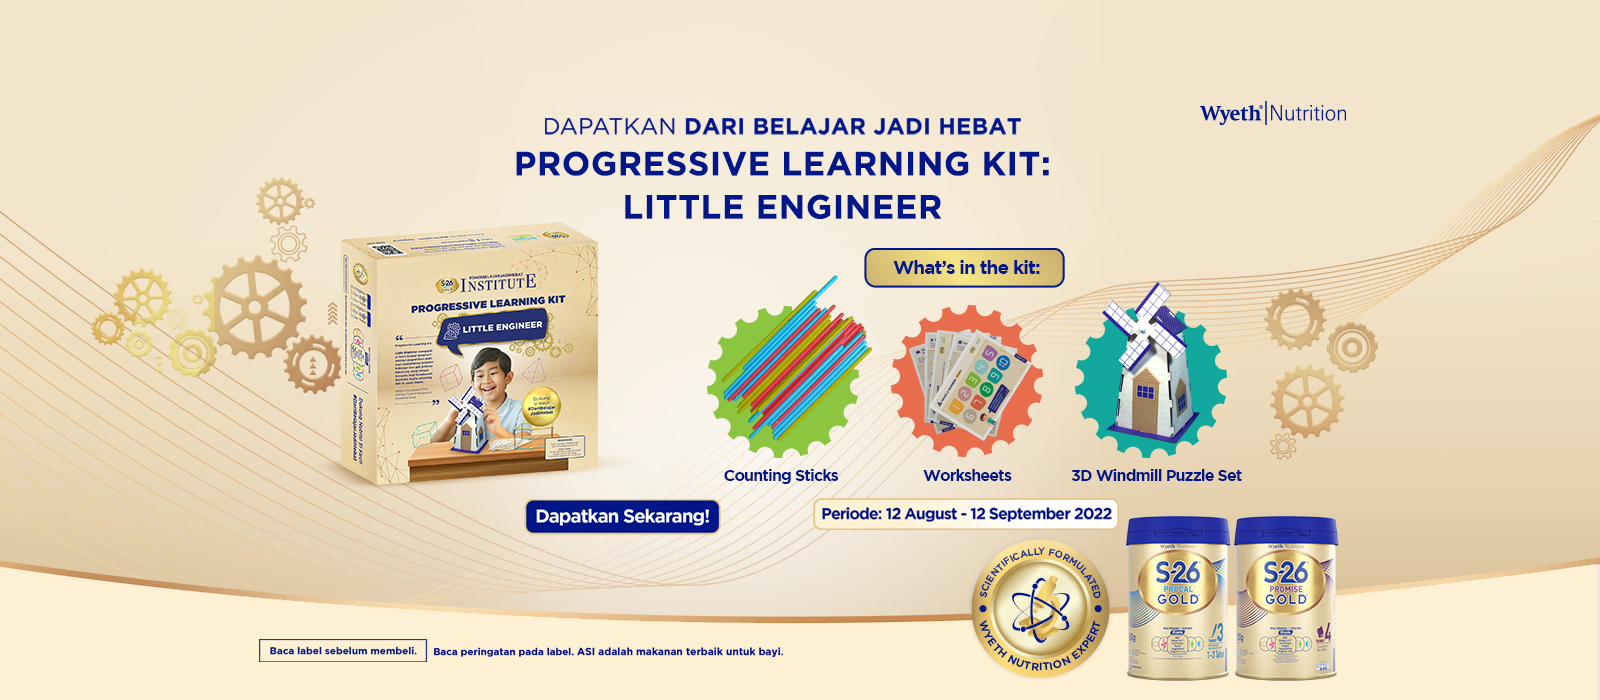 Dukung Belajar Progresif Anak dengan Progressive Learning  Kit: Little Engineer